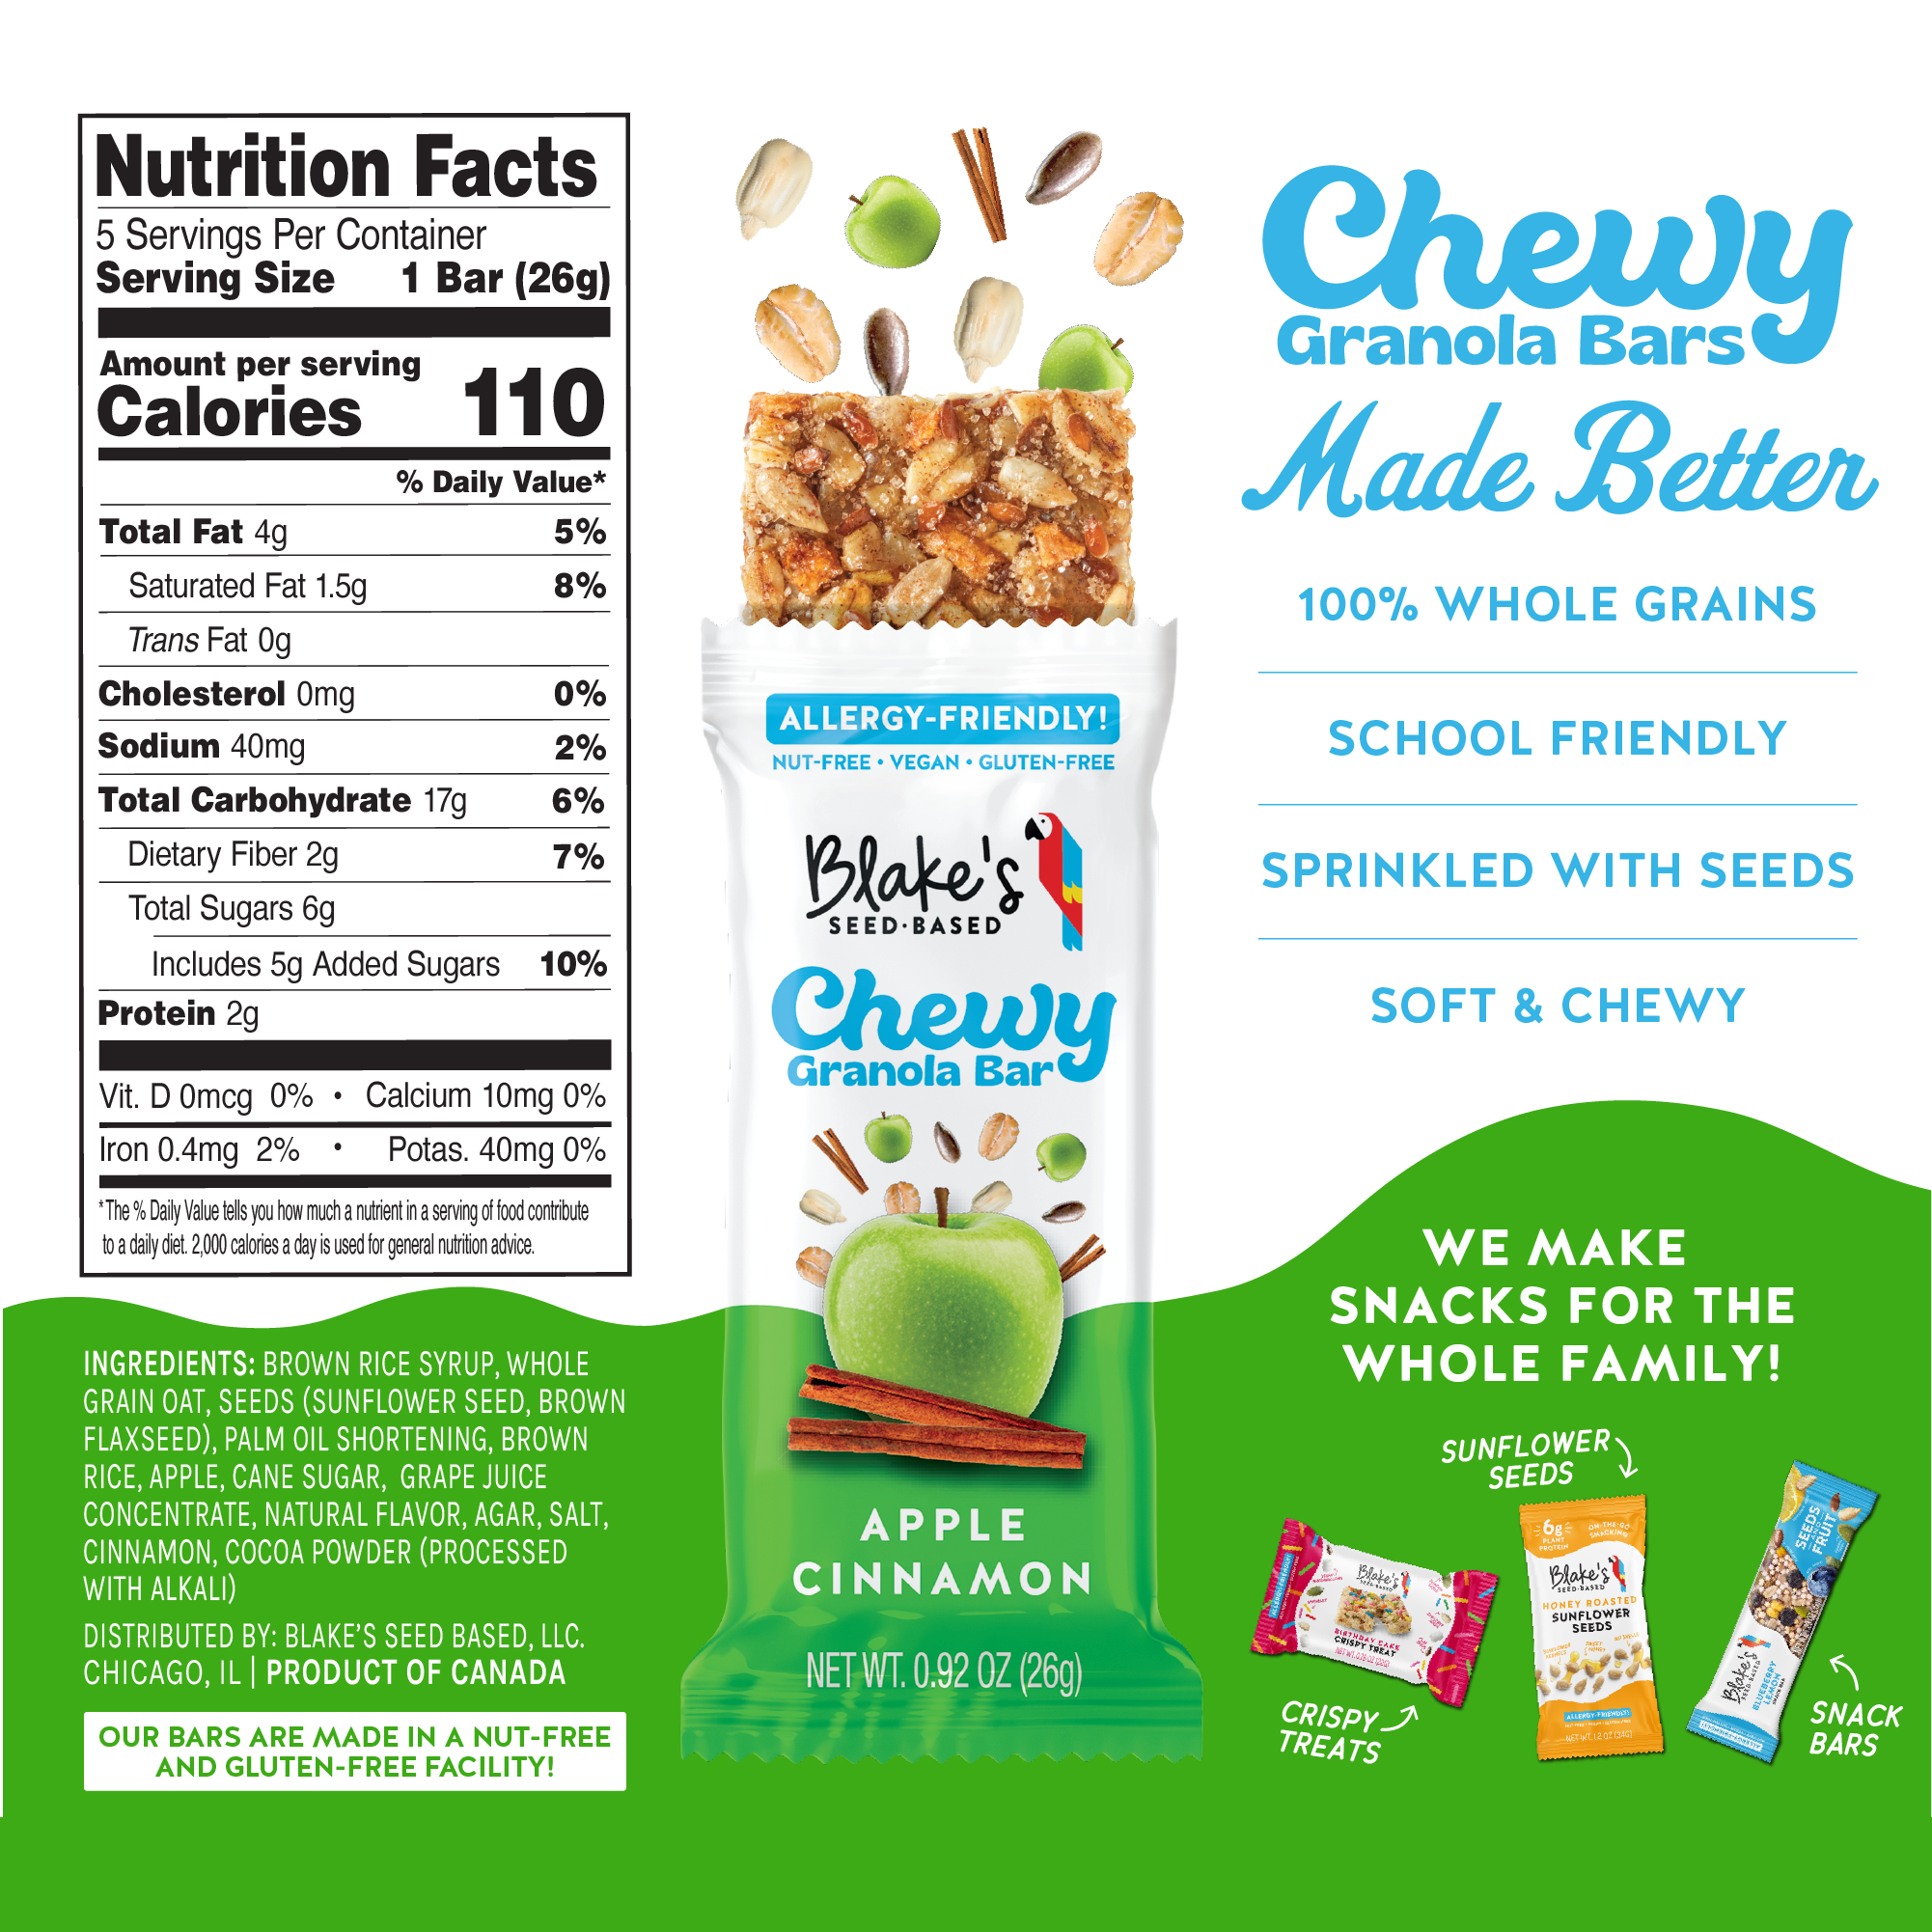 Blake's Seed Based Apple Cinnamon Chewy Granola Bar 12 innerpacks per case 4.6 oz